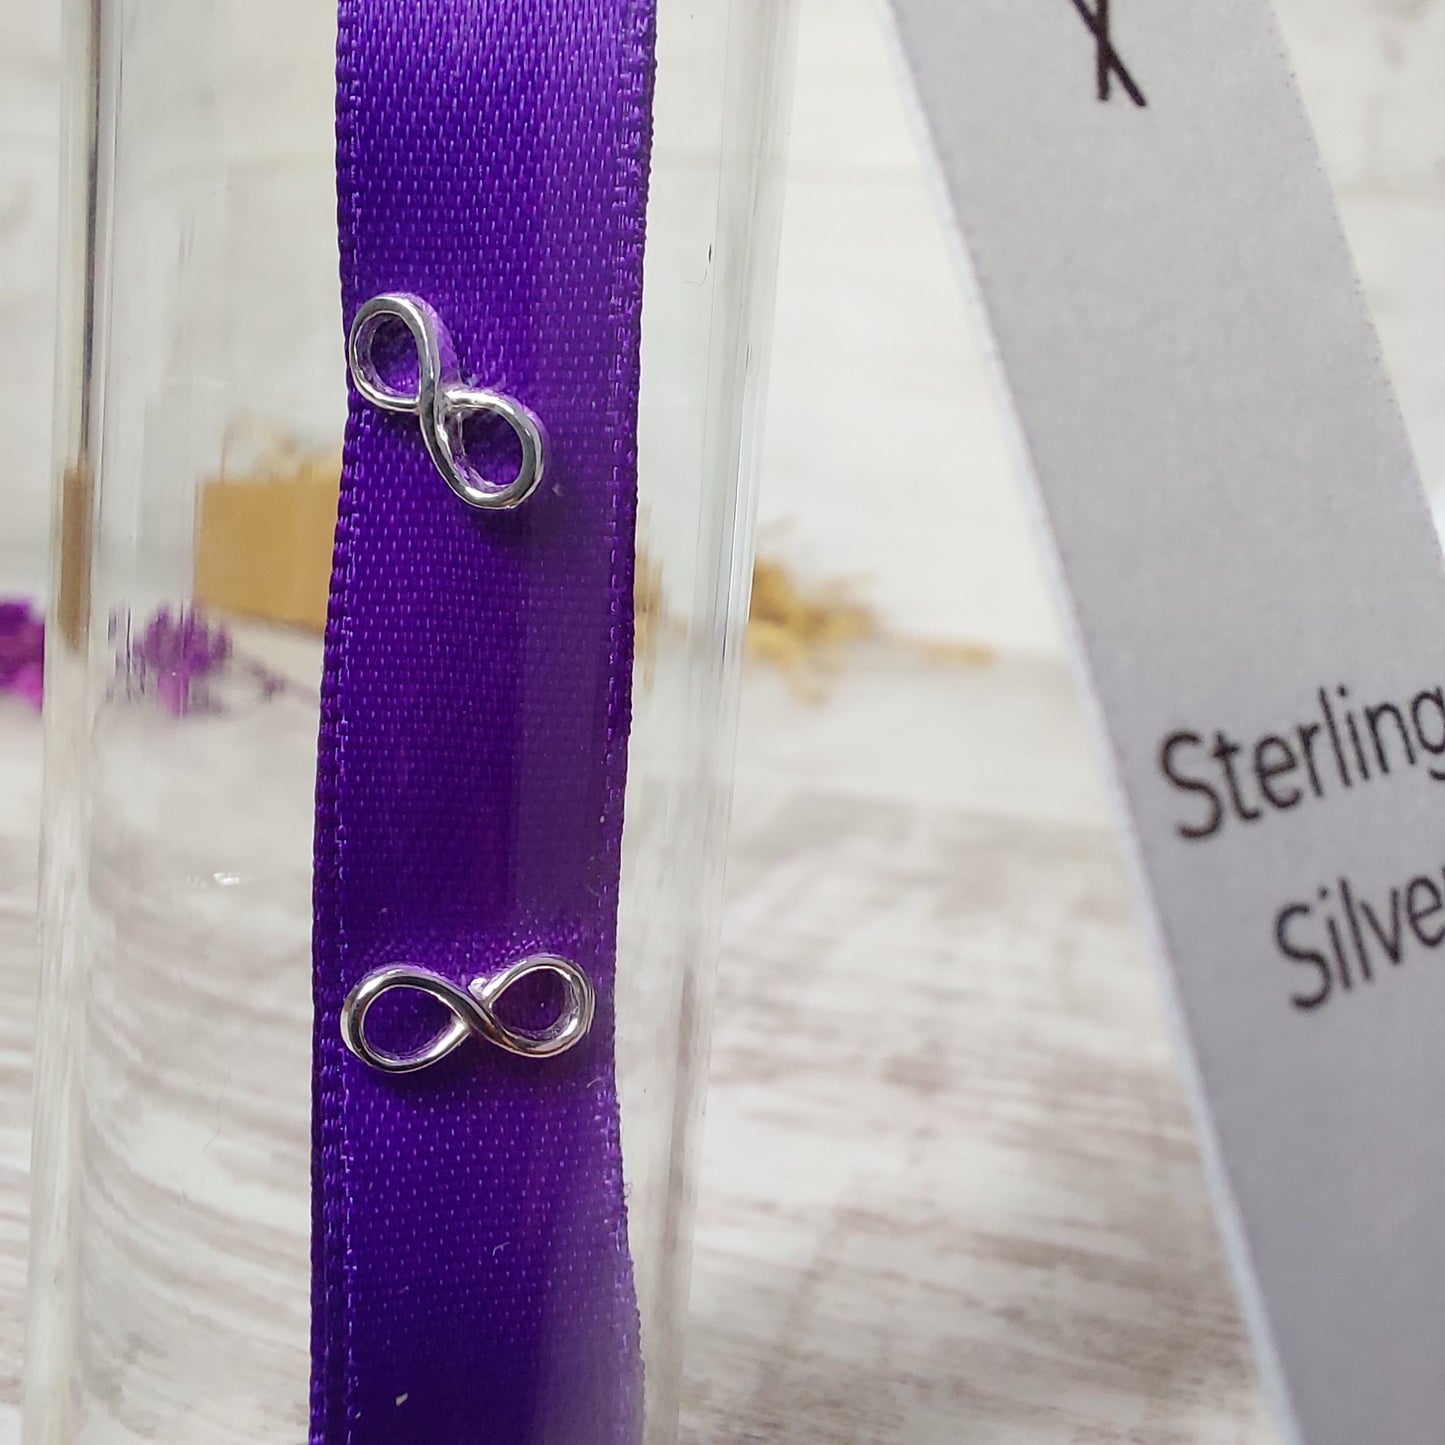 Infinity Sterling Silver Earrings in Gift Box